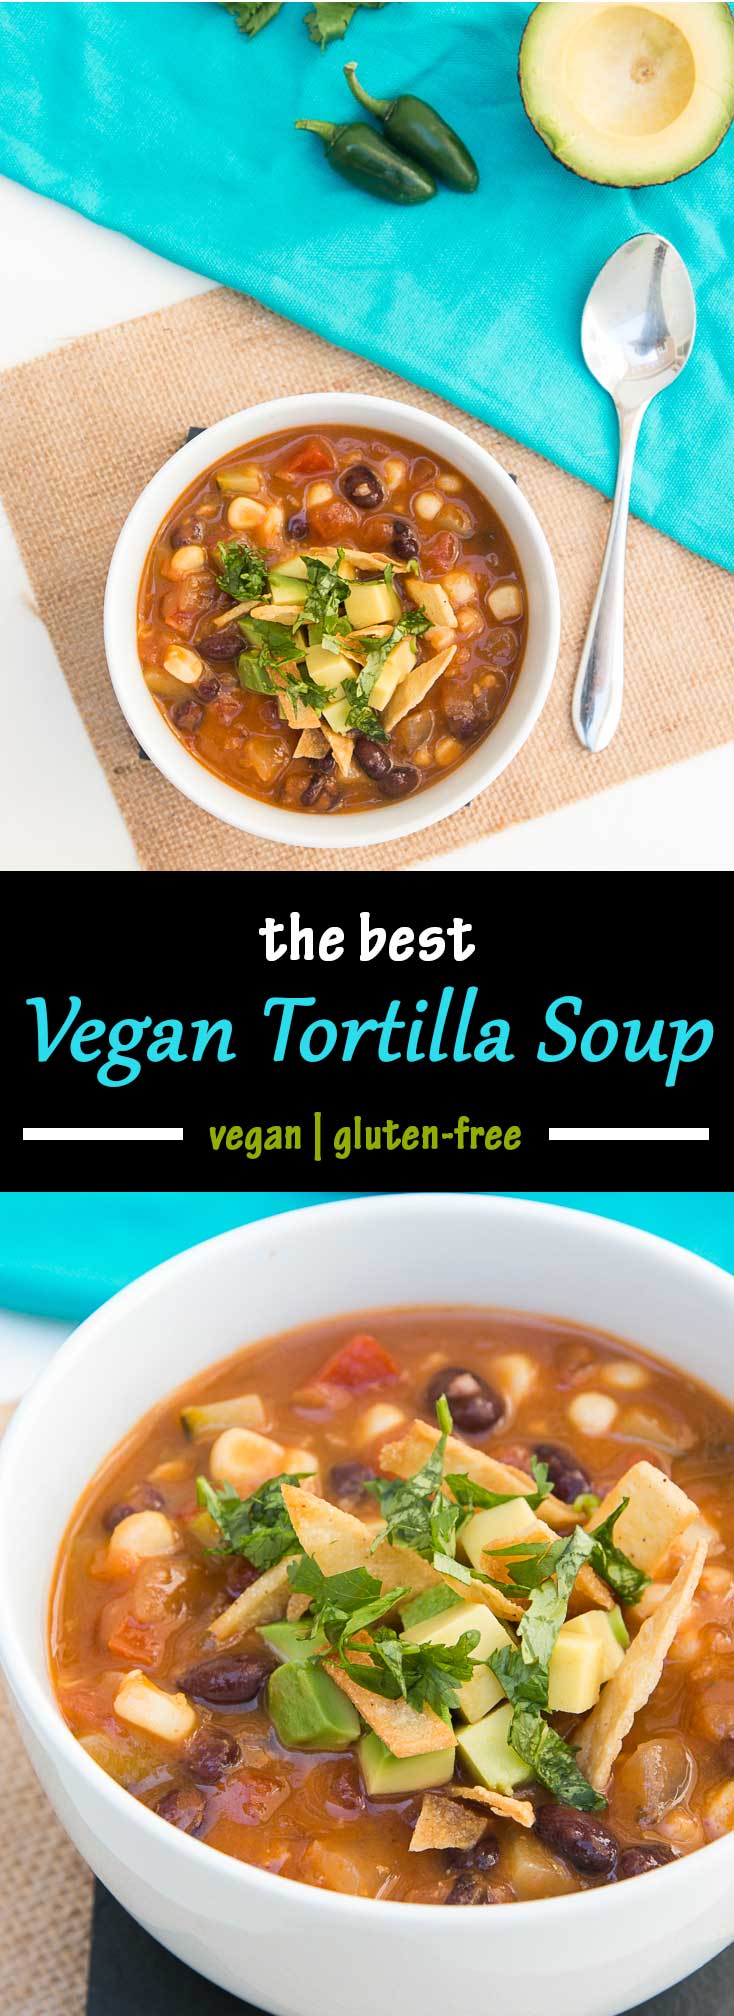 Vegan Tortilla Soup #vegan #glutenfree | www.VegetarianGastronomy.com